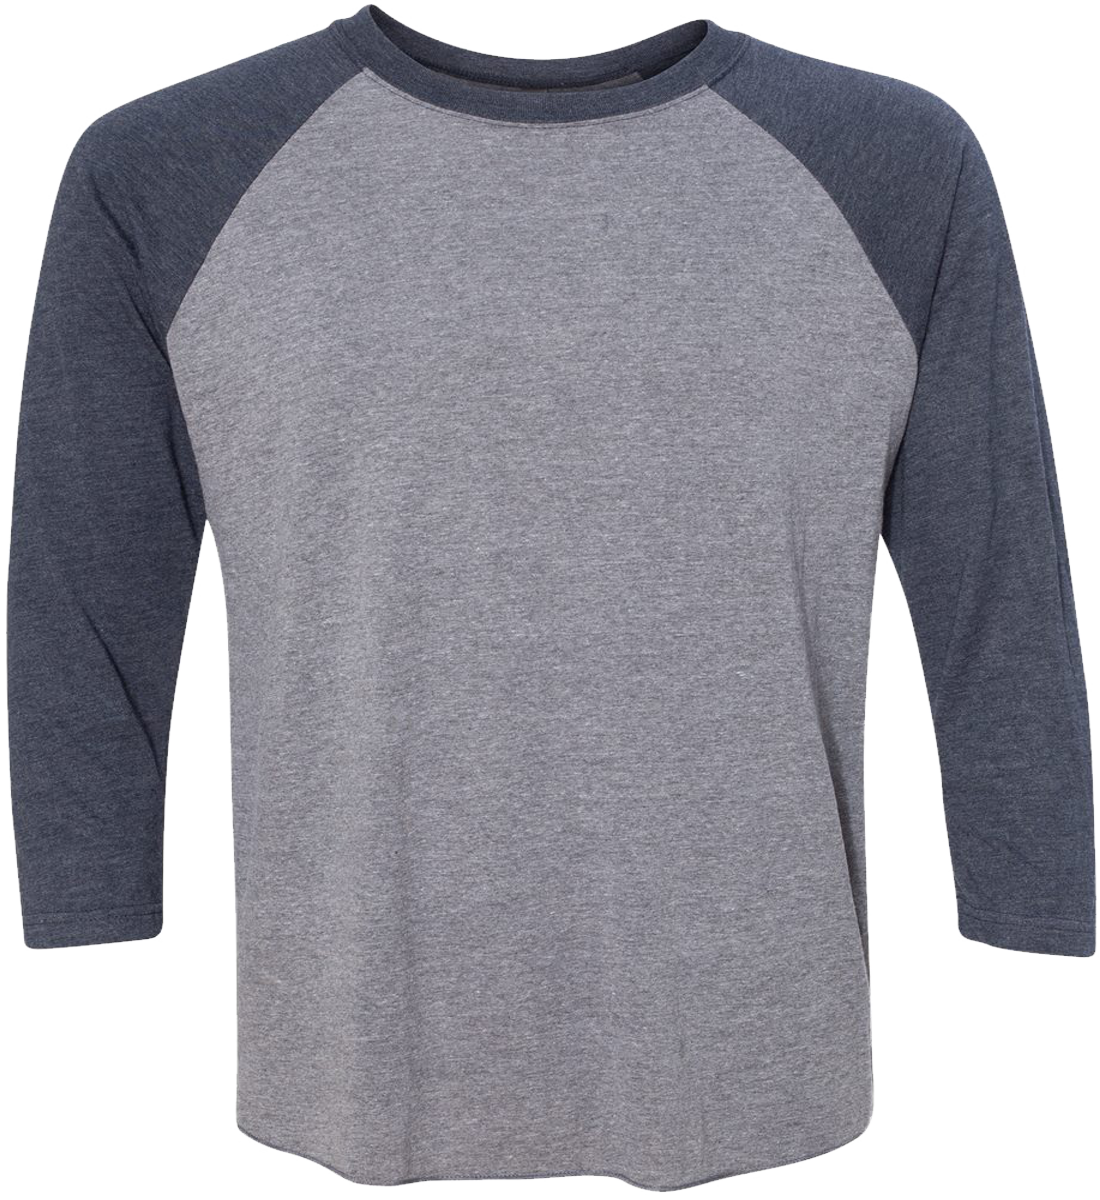 Sweatshirt clipart rugby shirt. Inspire raglan sleeve